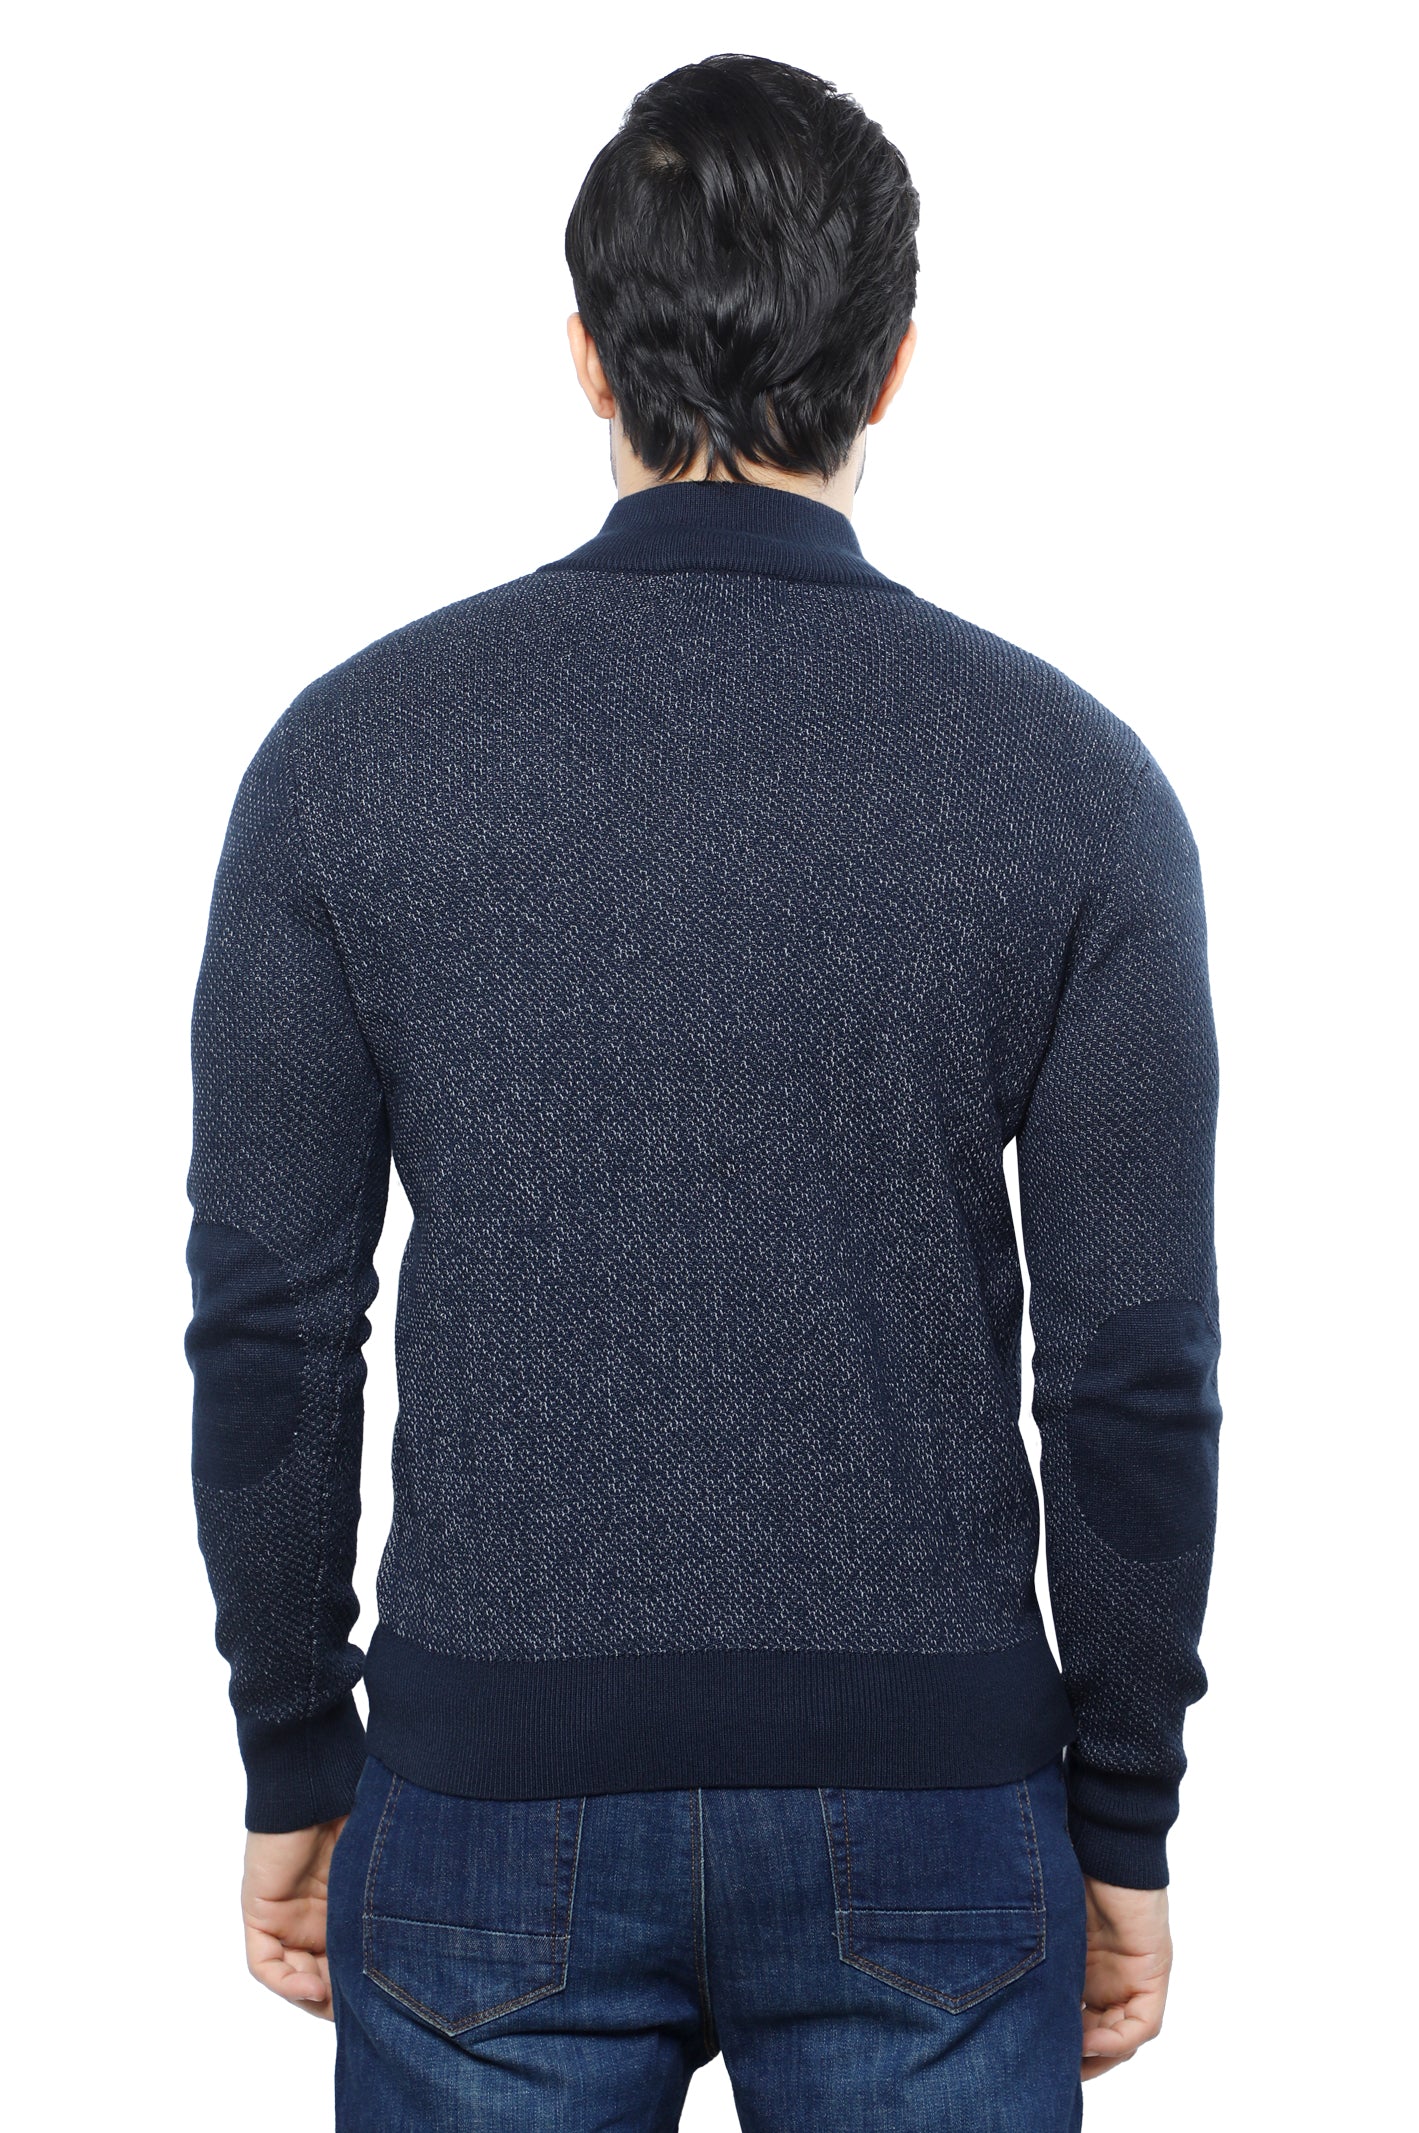 Gents Sweater SKU: SA609-D-BLUE - Diners